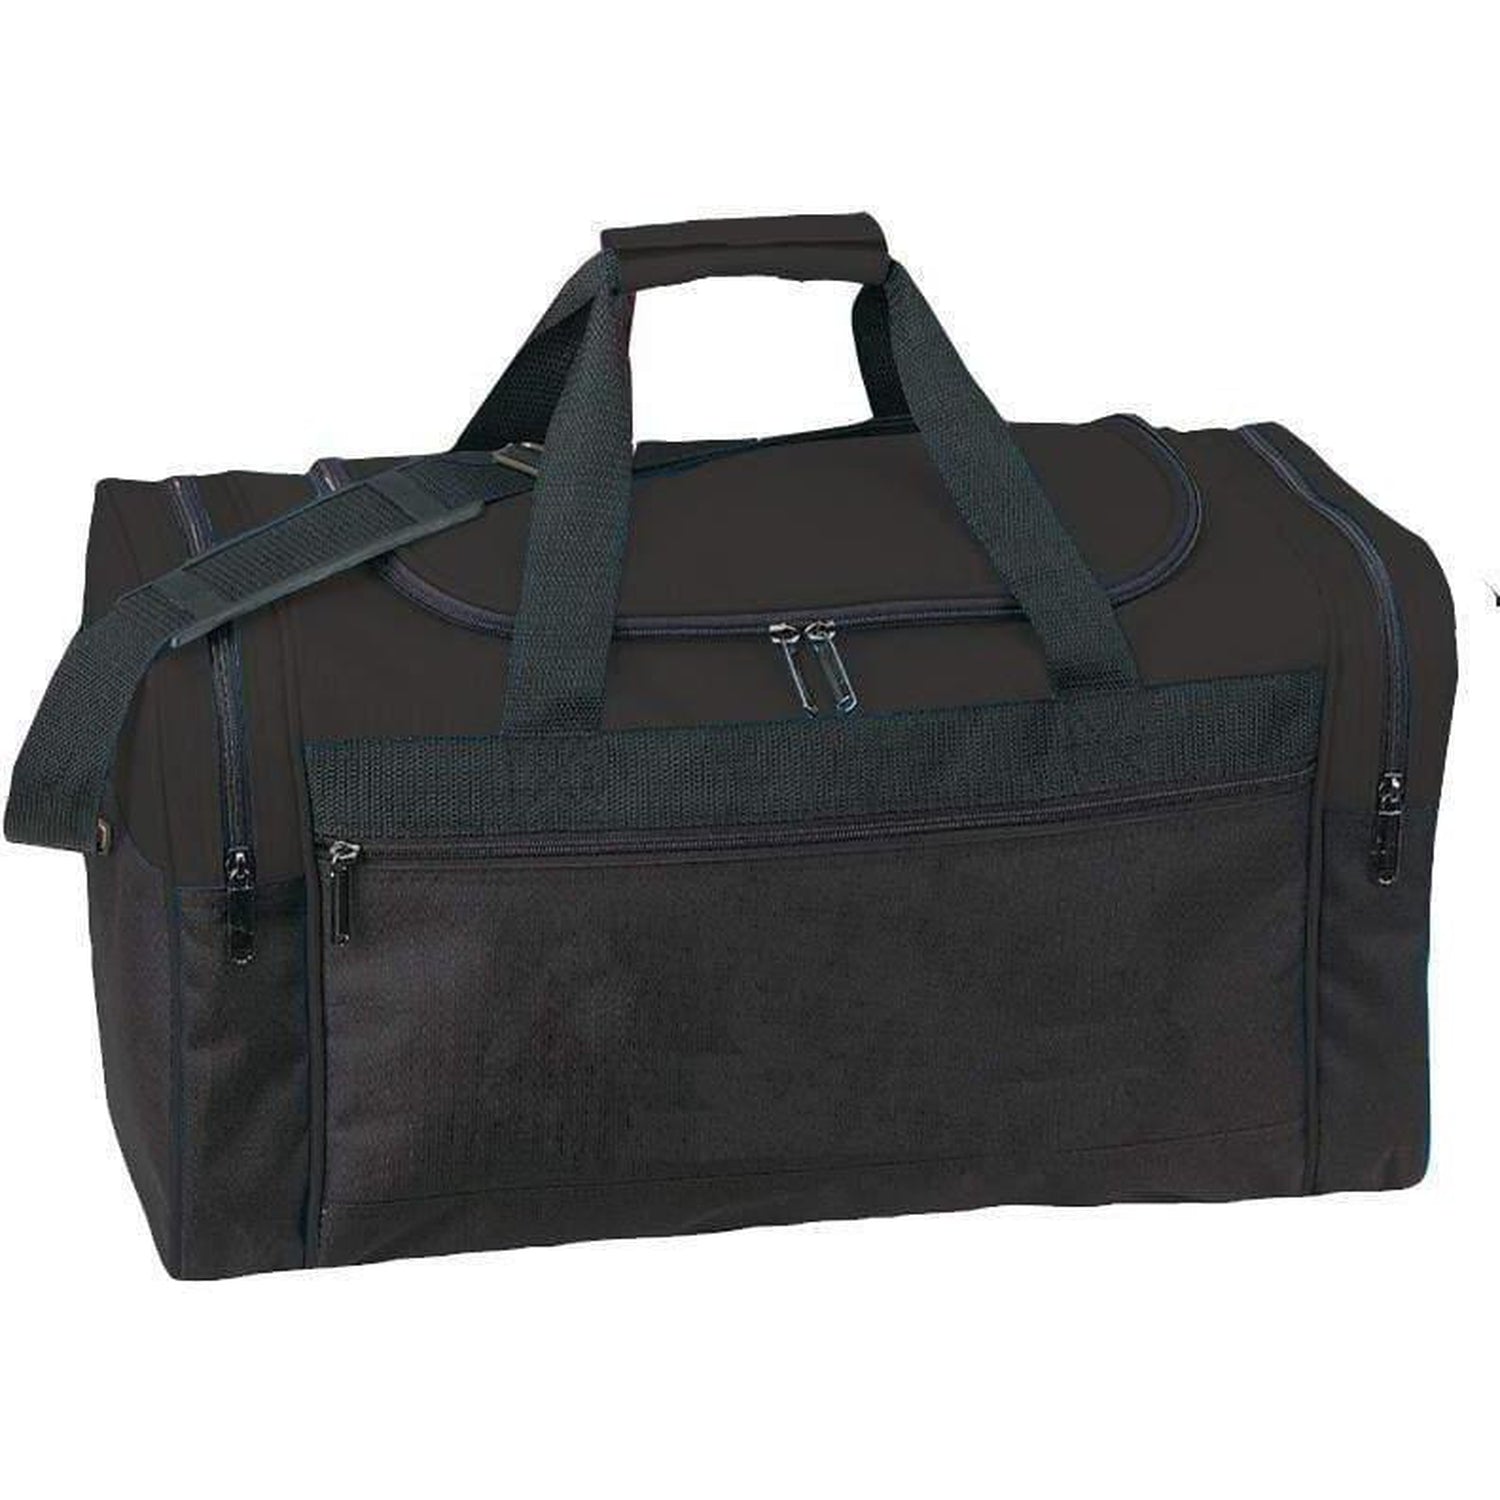 Wholesale Duffle Bags, Travel Duffle Bags in Bulk, Custom Duffle Bags – BagzDepot™